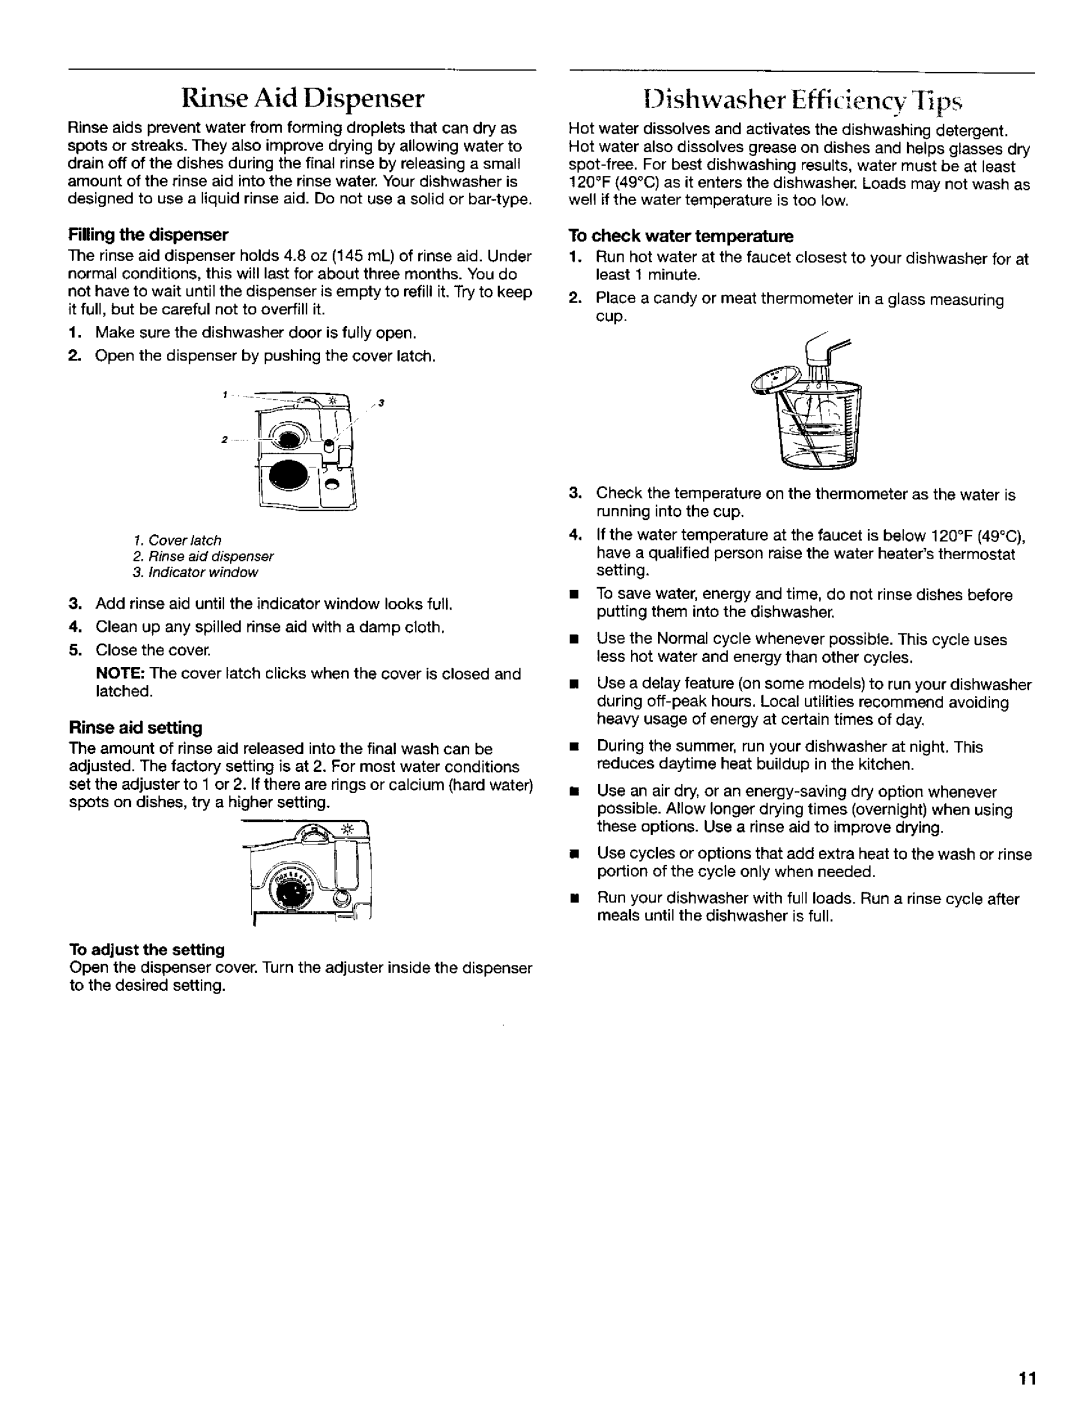 KitchenAid 8269909 manual Rinse Aid Dispenser, Dishwasher EffMencv 31. p s, Rinse aid setting, To adjust the setting 